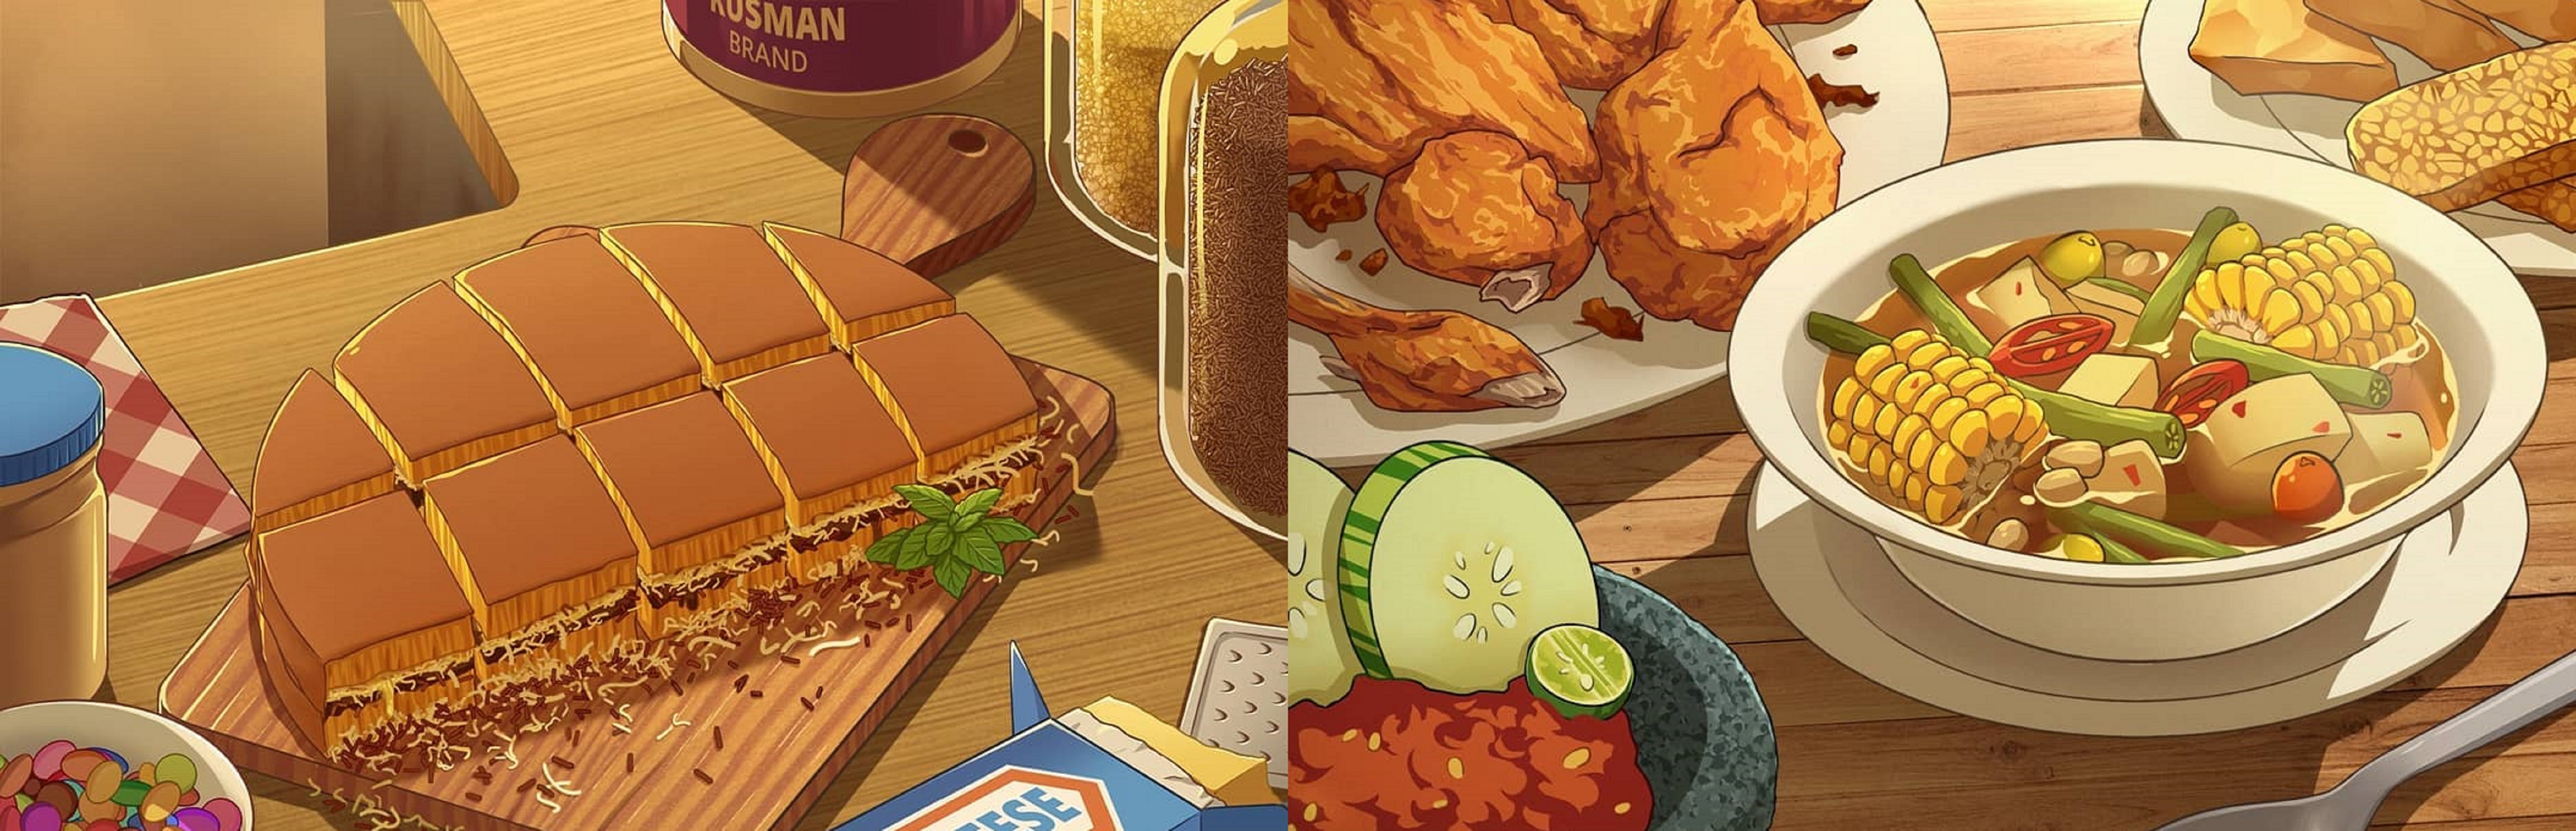 17 Ilustrasi makanan khas Indonesia versi anime karya Alfeus Christie